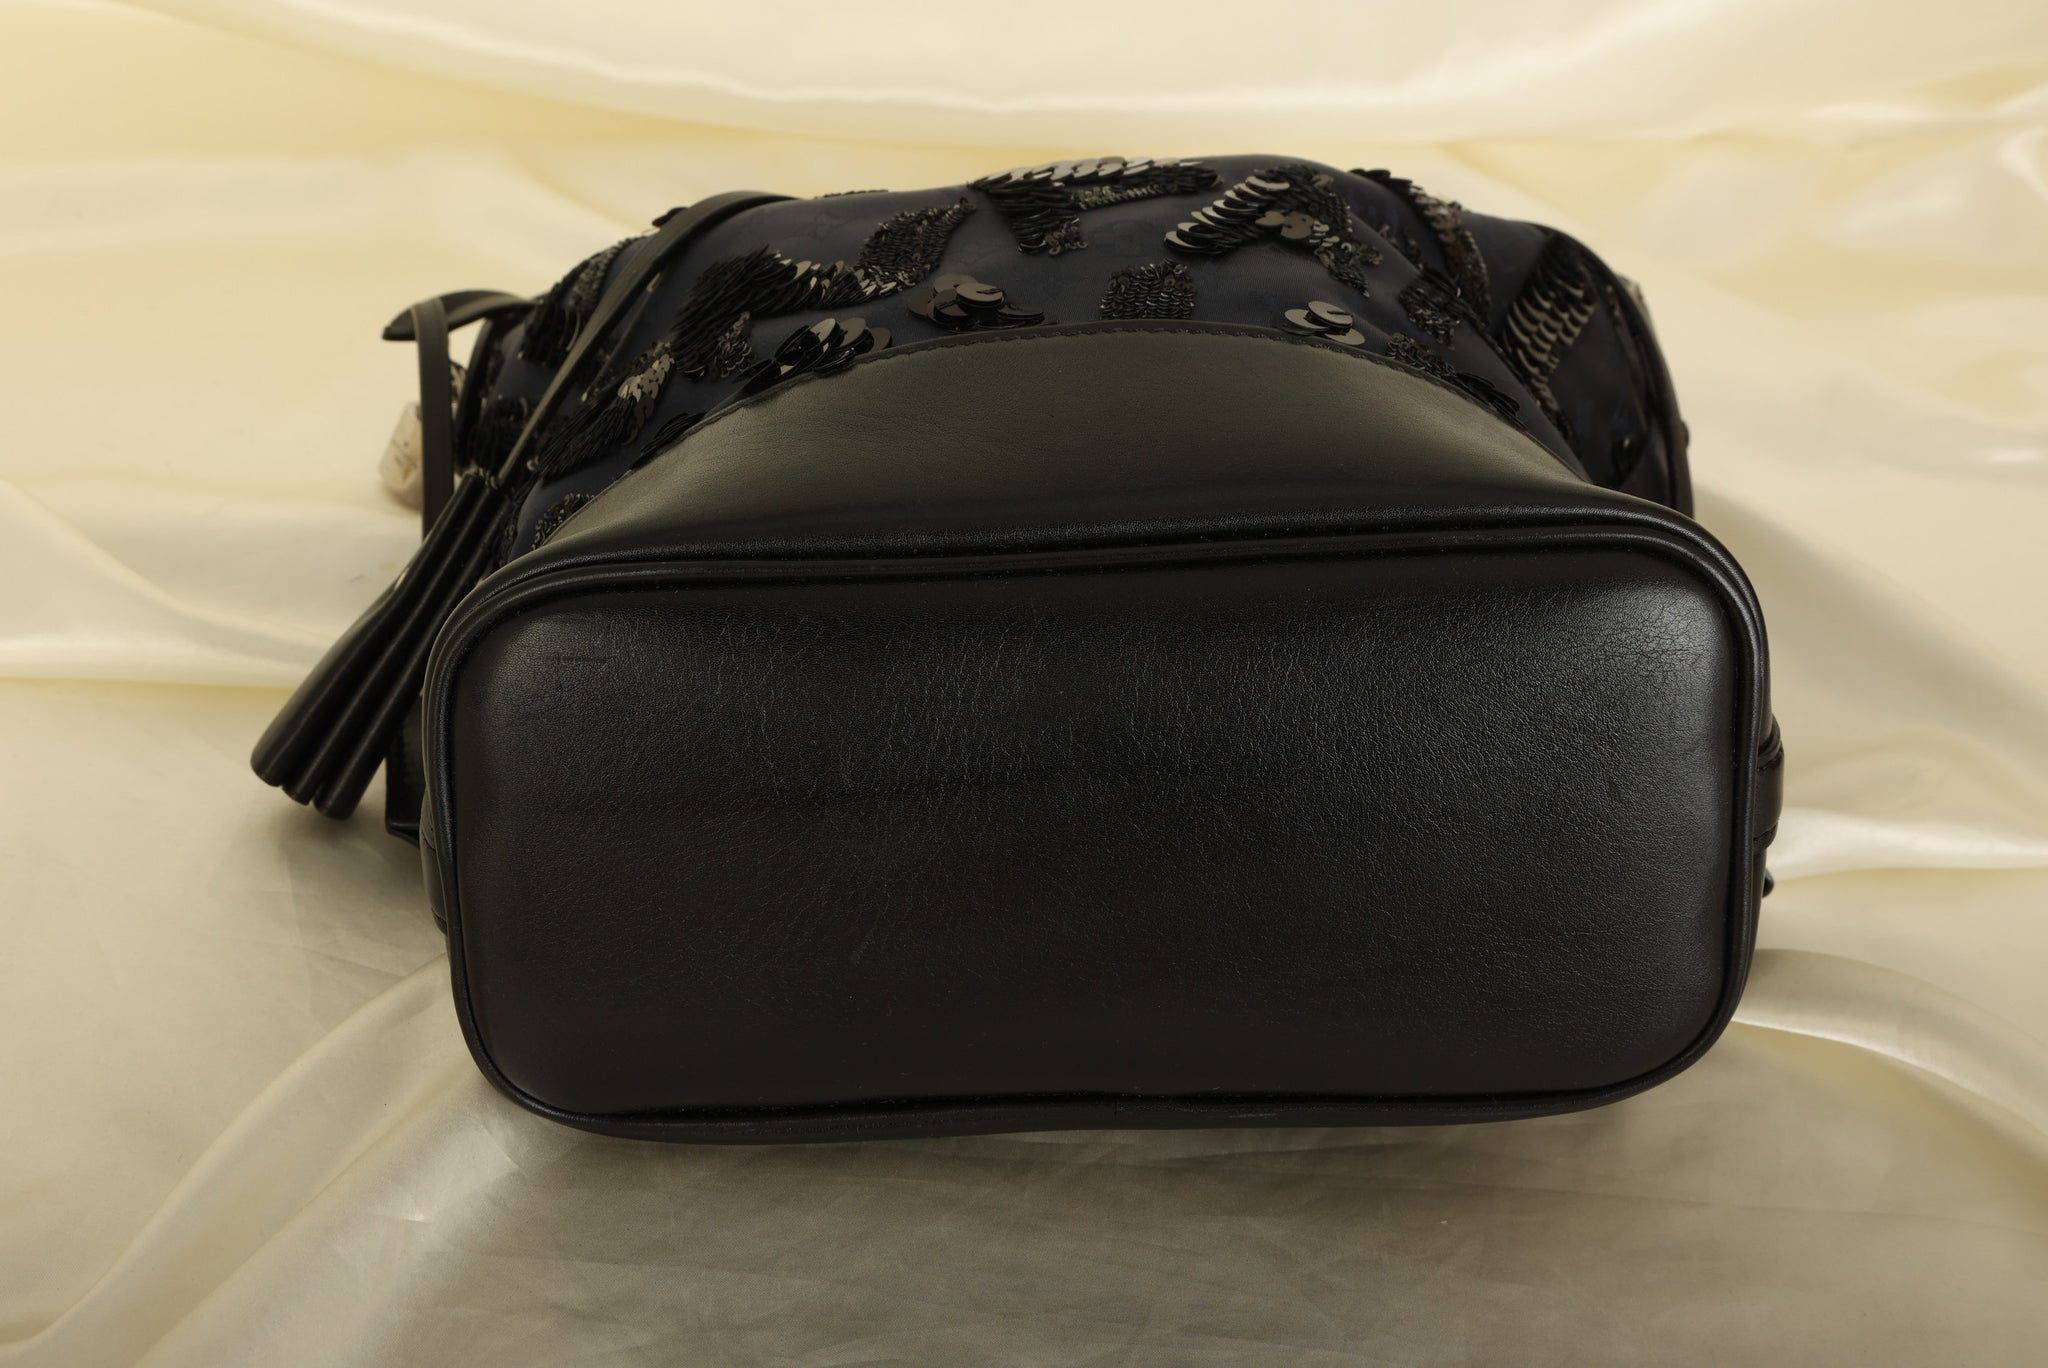 Limited Edition Louis Vuitton Satin Sequin Bucket Bag & Pouch